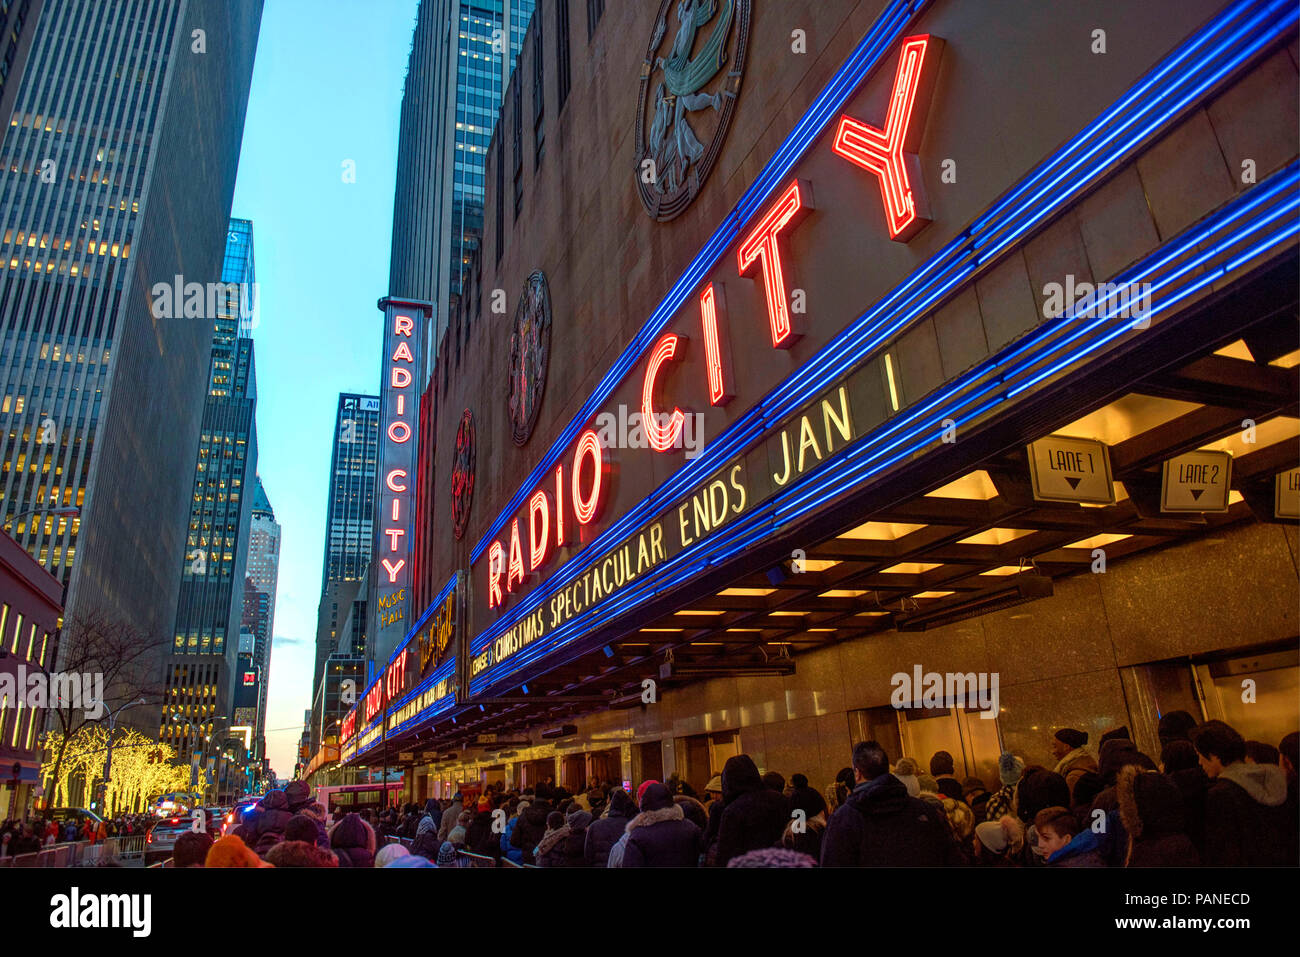 The facade  of the Radio City Music Hall, Manhattan, New York City, USA, December 29, 2017    Photo © Fabio Mazzarella/Sintesi/Alamy Stock Photo Stock Photo